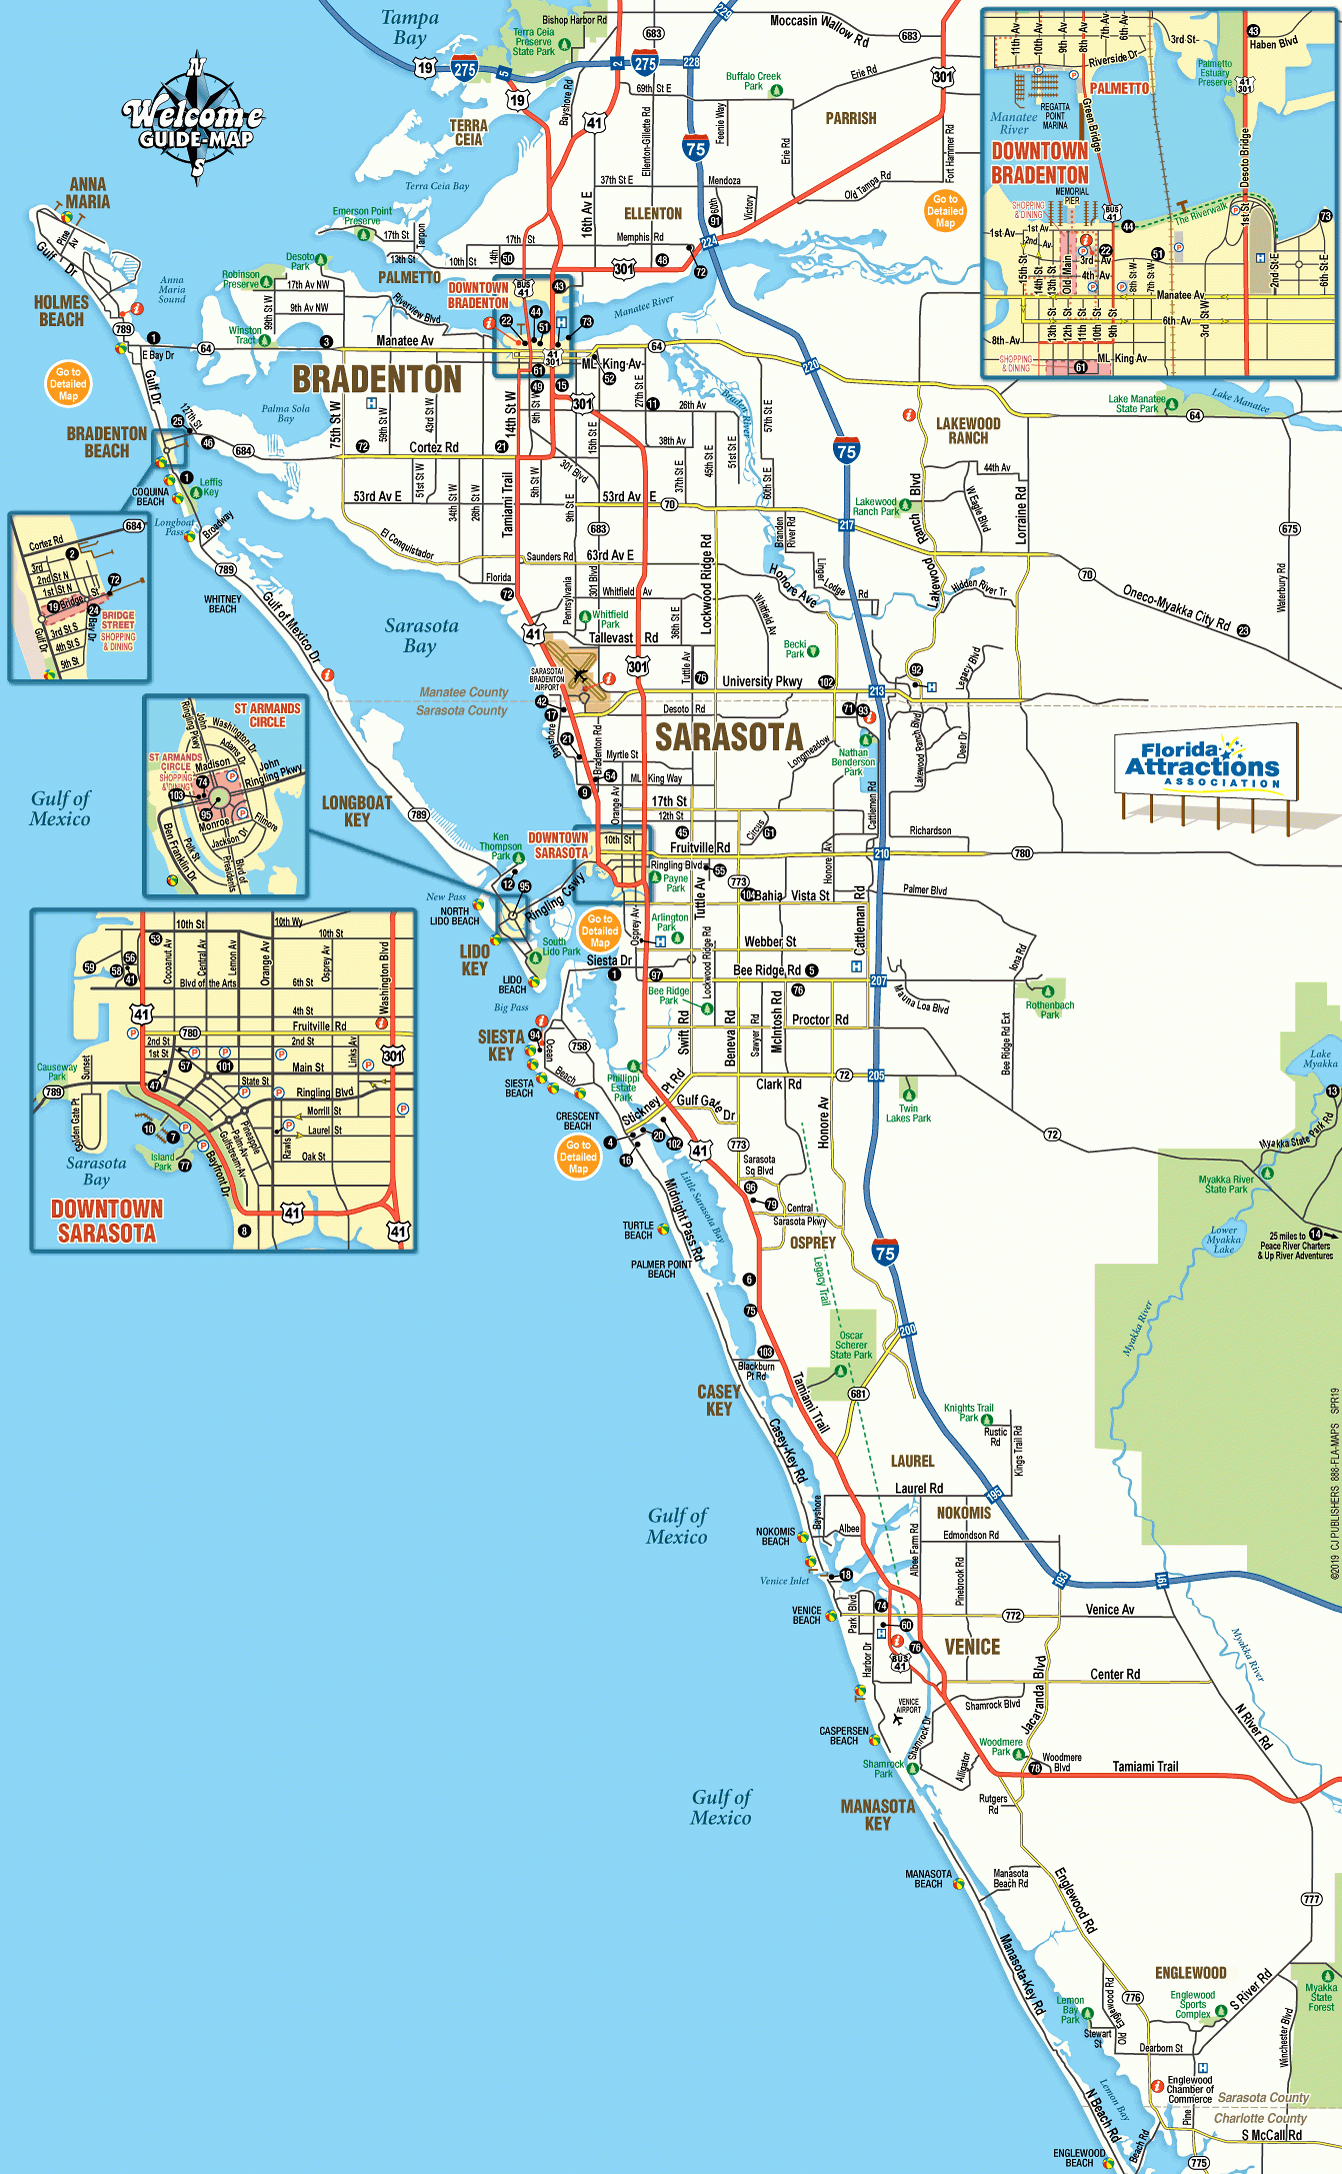 Map Of Sarasota And Bradenton Florida - Welcome Guide-Map To - Ellenton Florida Map